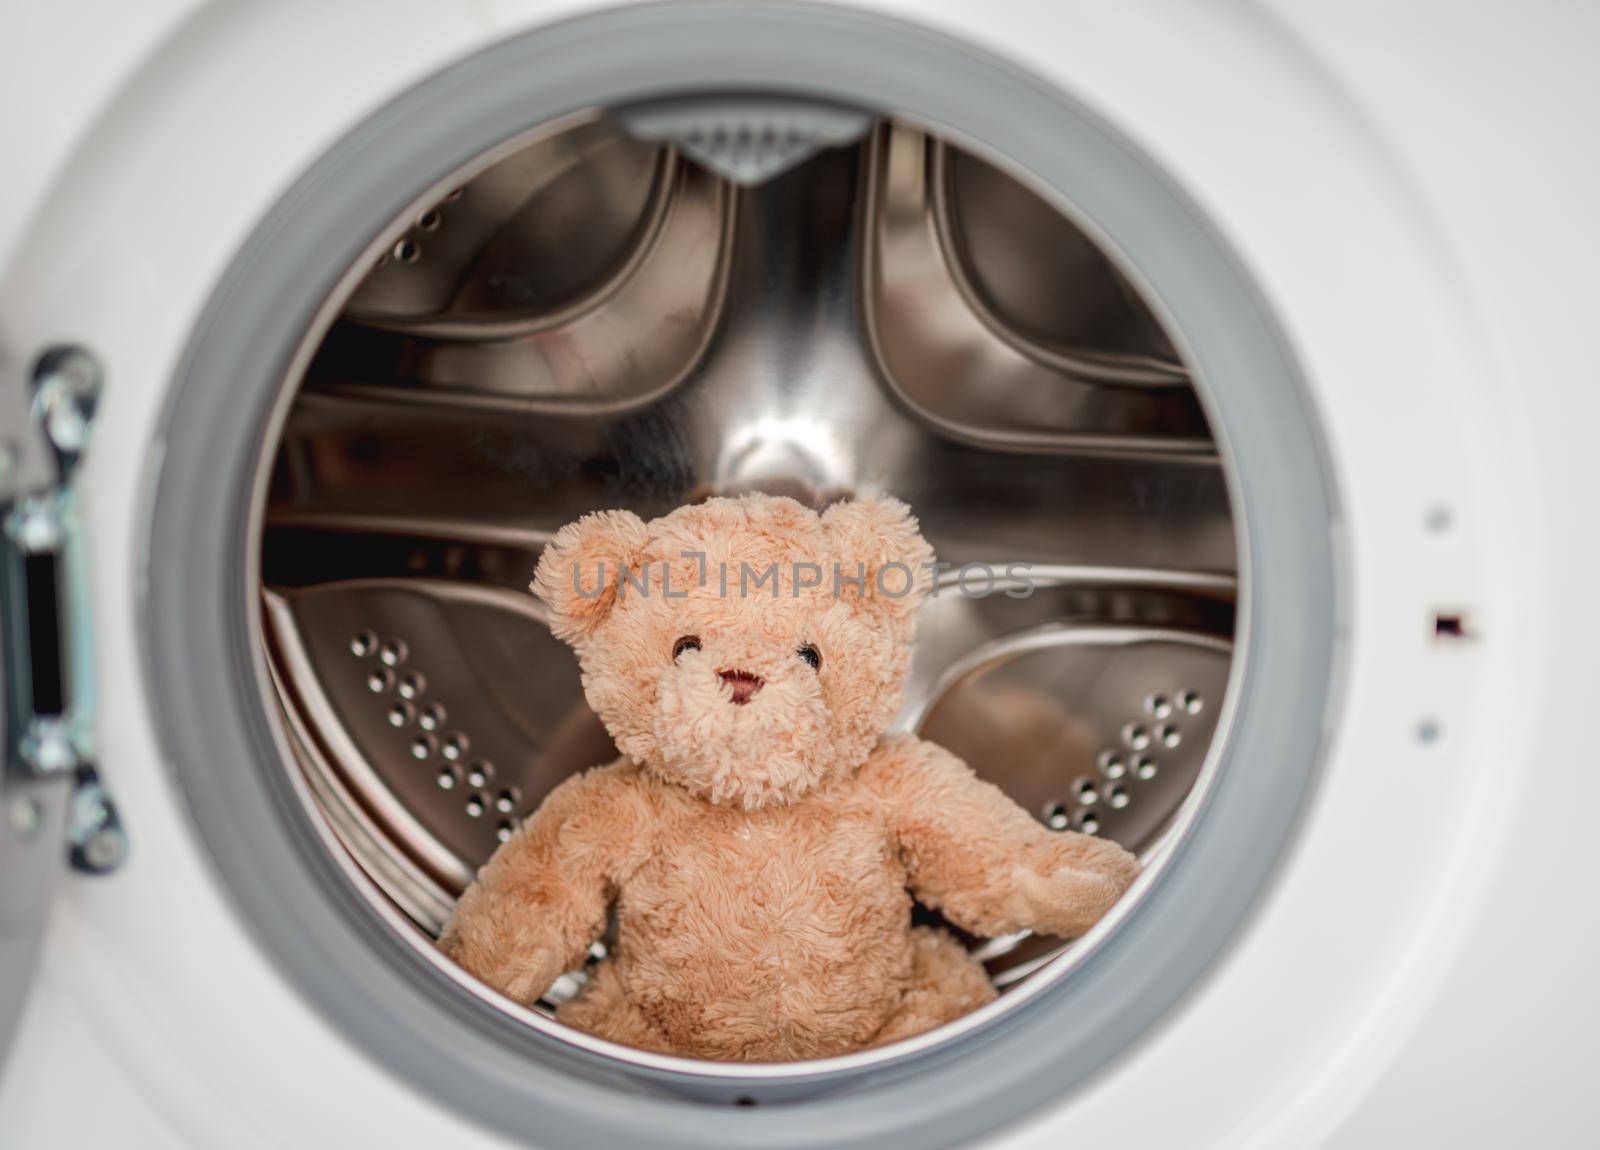 Plush teddy bear after washing in machine by tan4ikk1